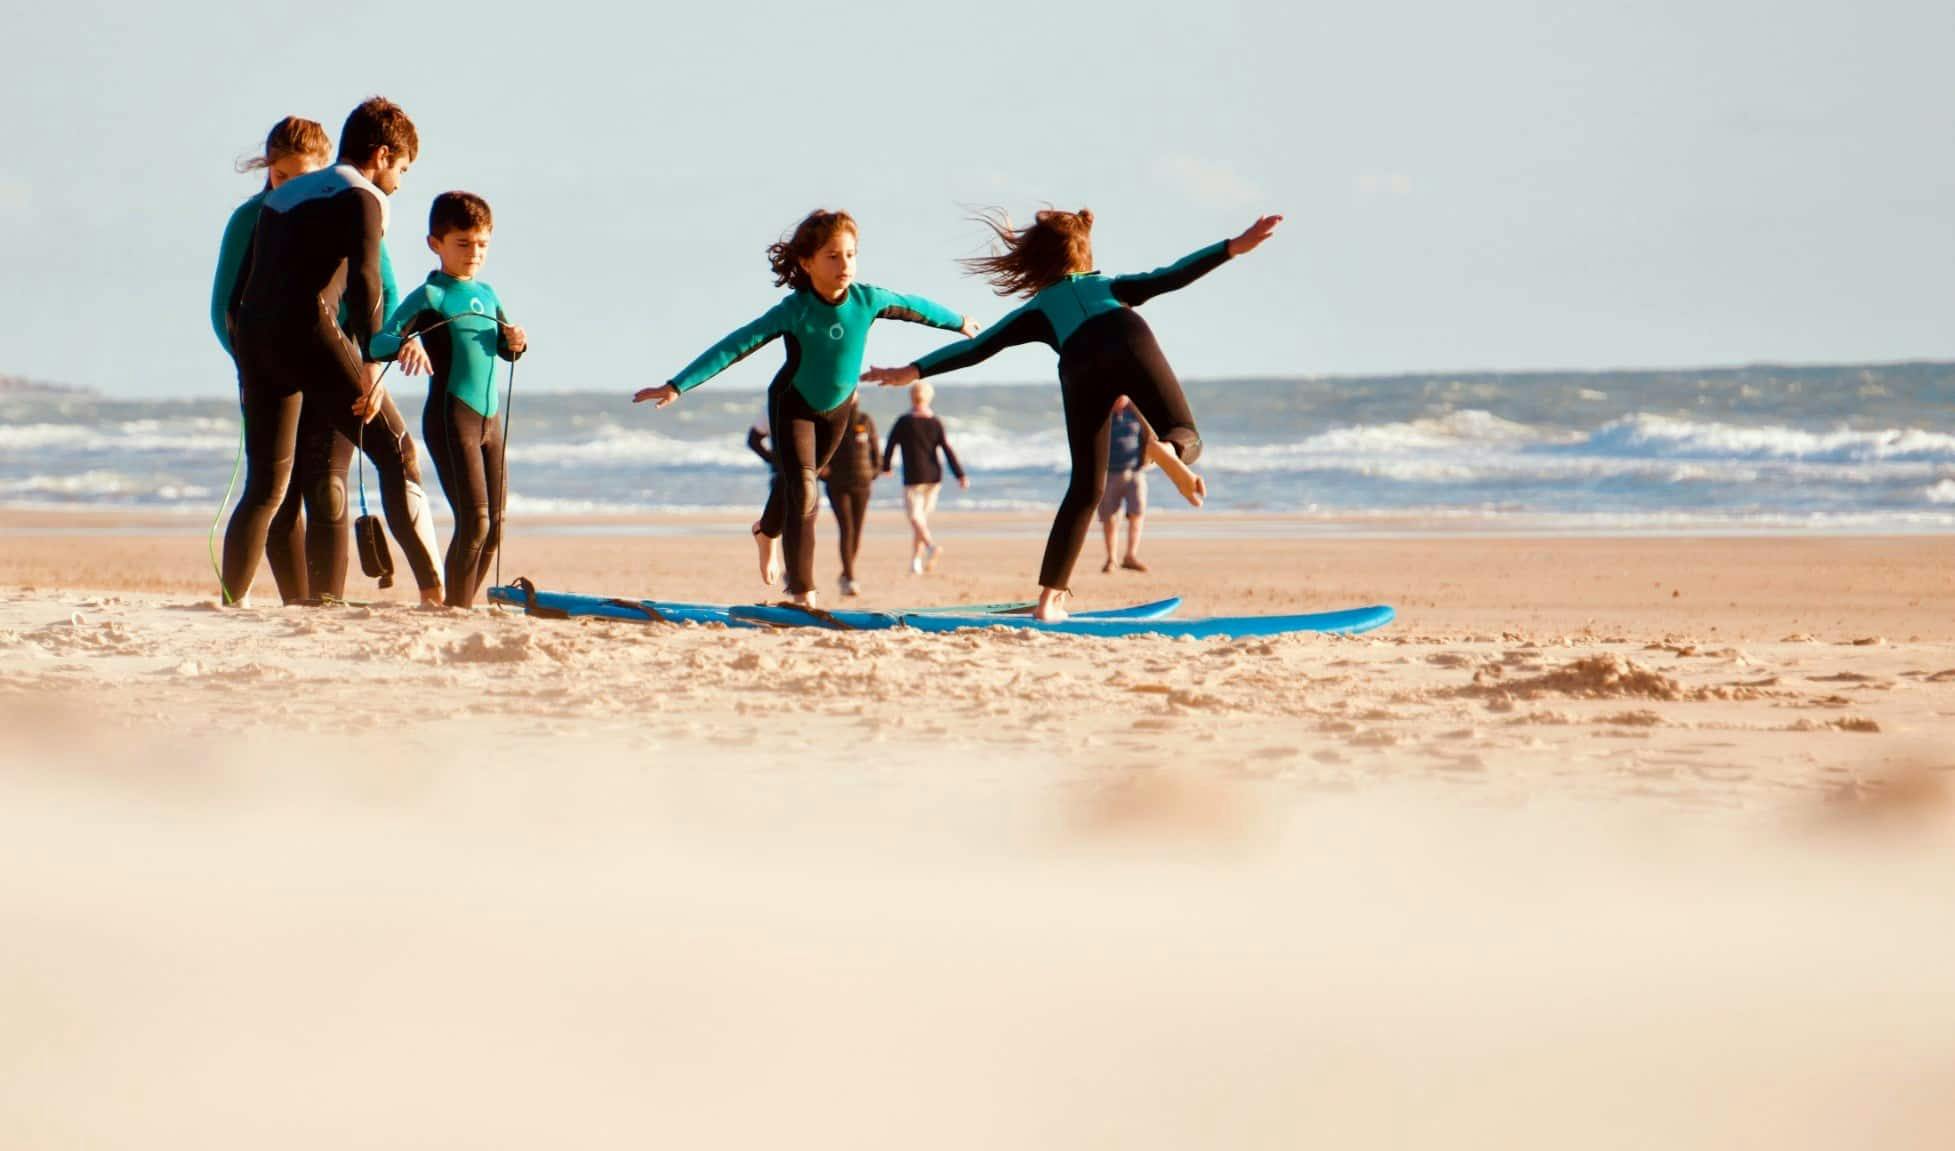 Four-day Costa de la Luz Surf Lesson